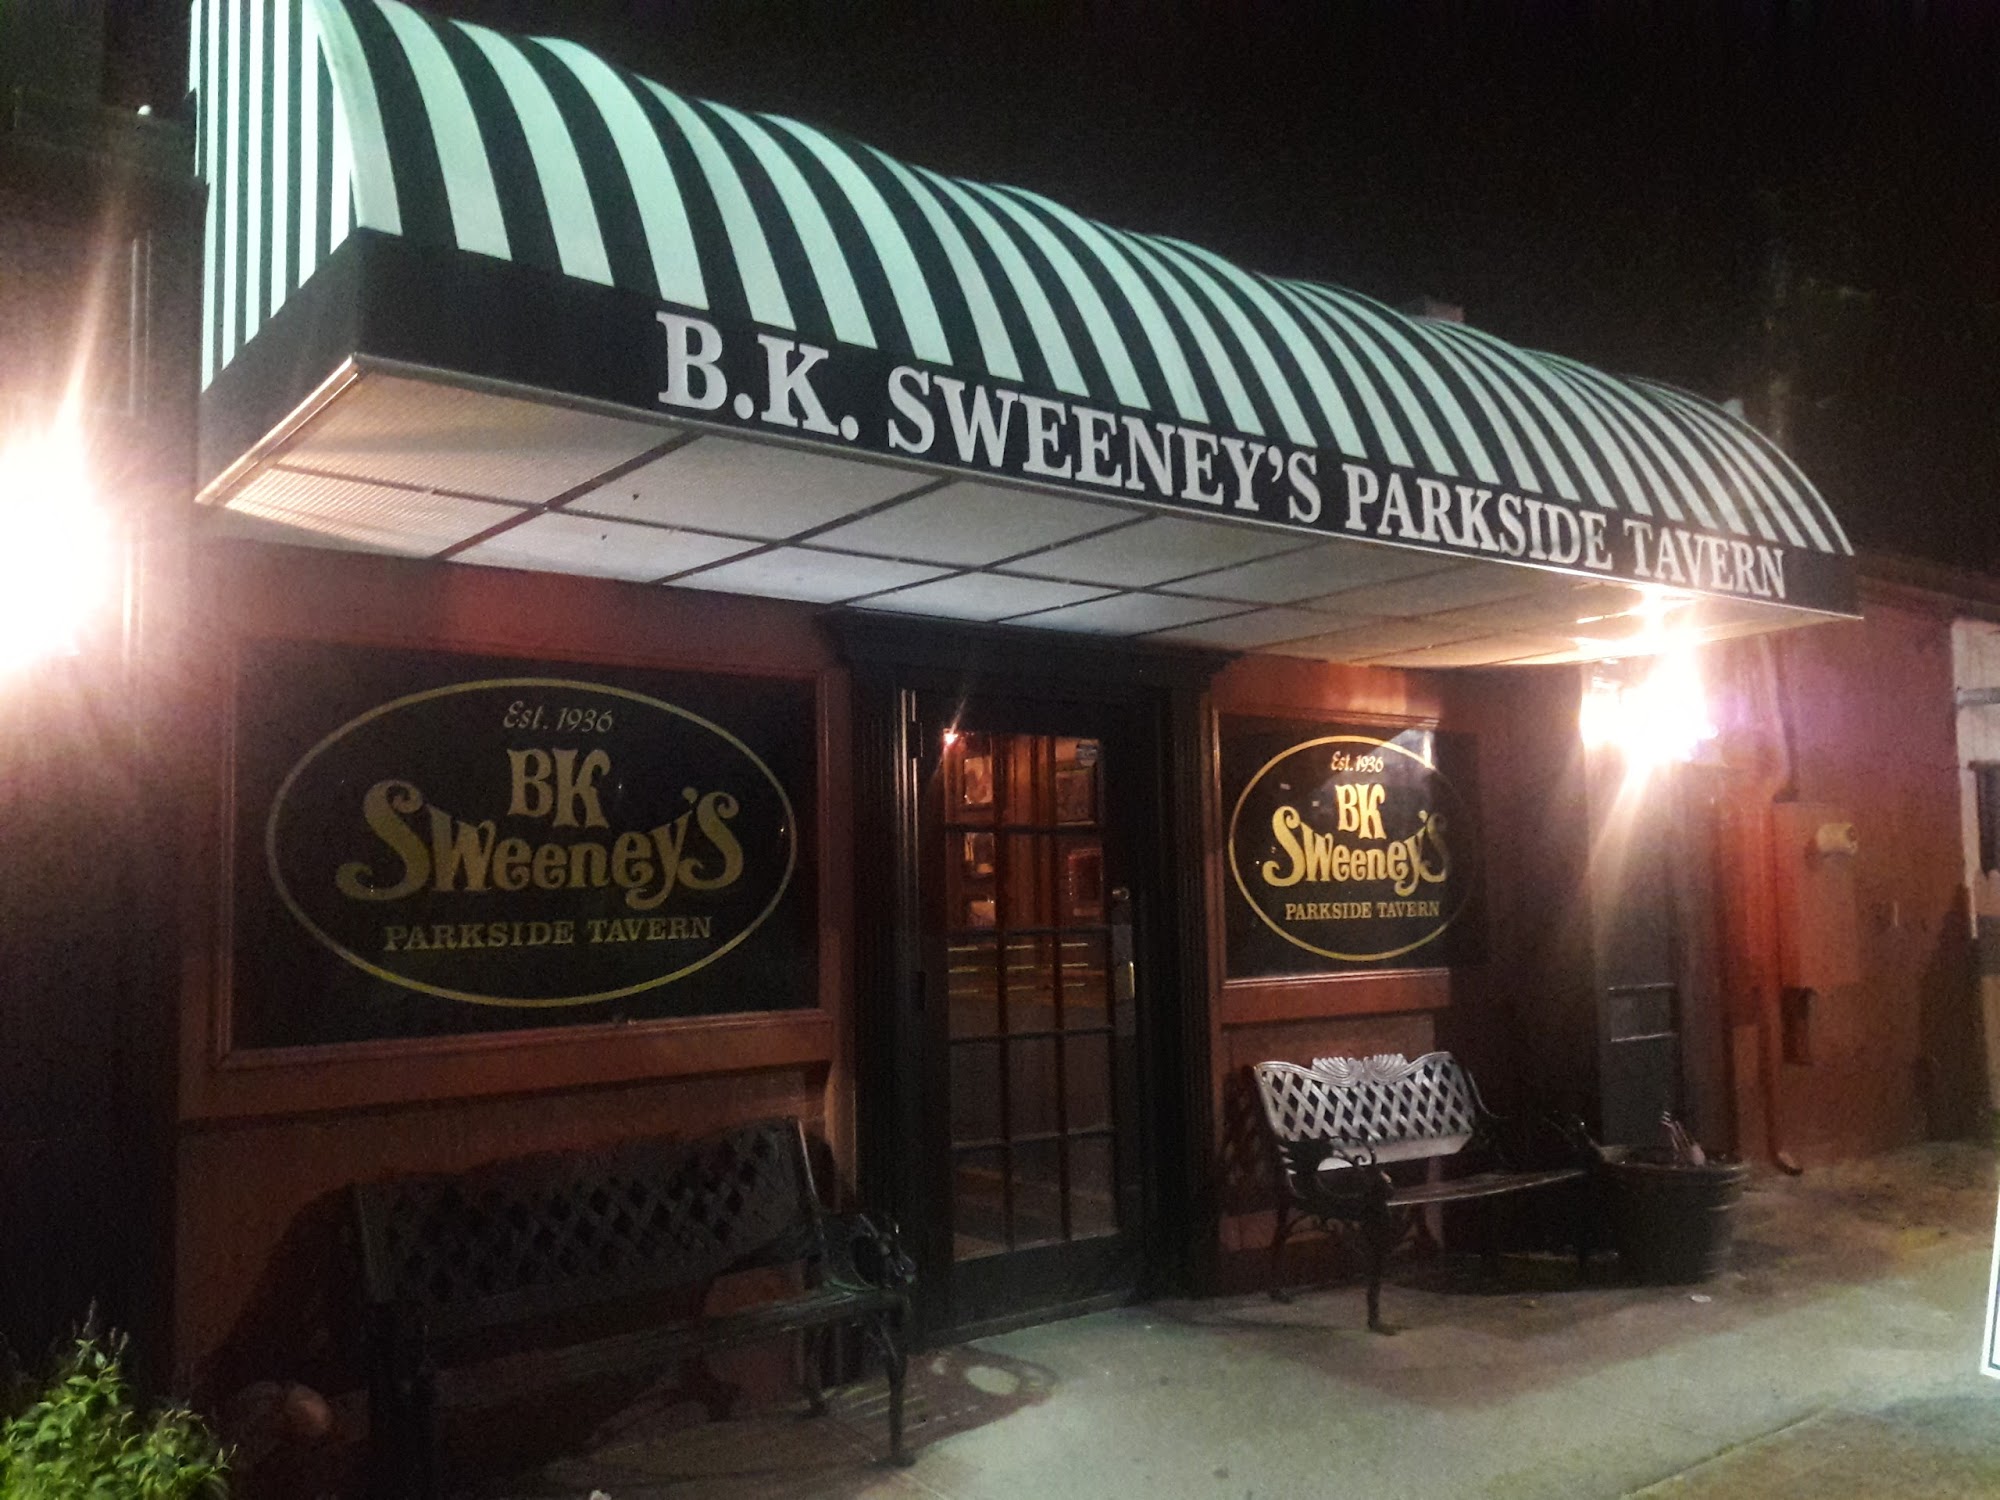 B.K. Sweeny's Parkside Tavern